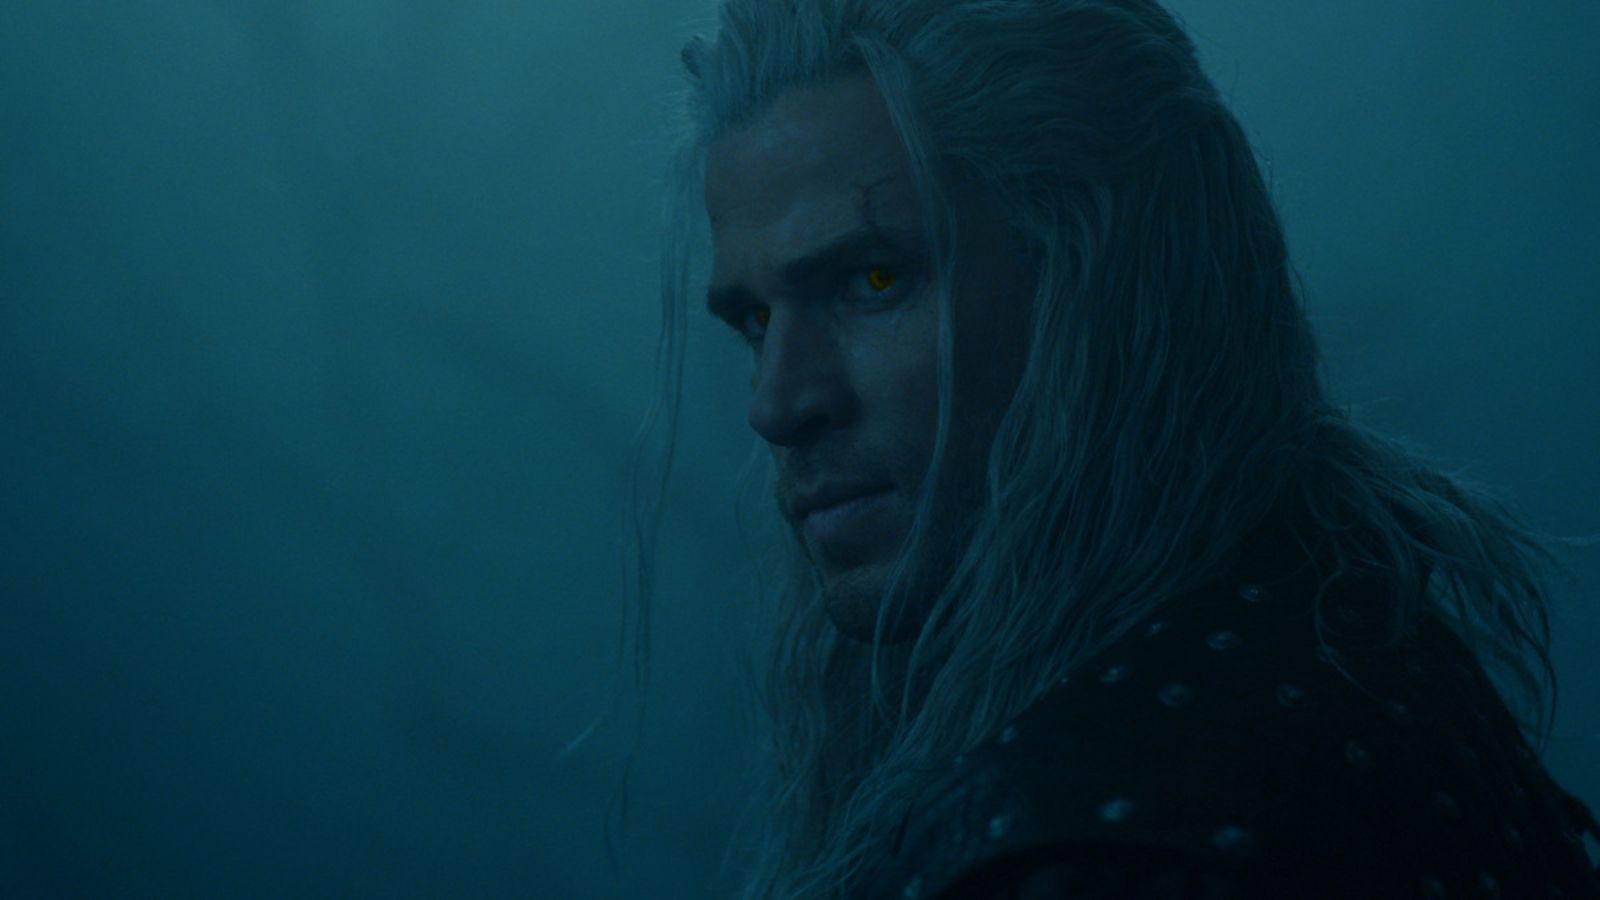 Liam Hemsworth as Geralt